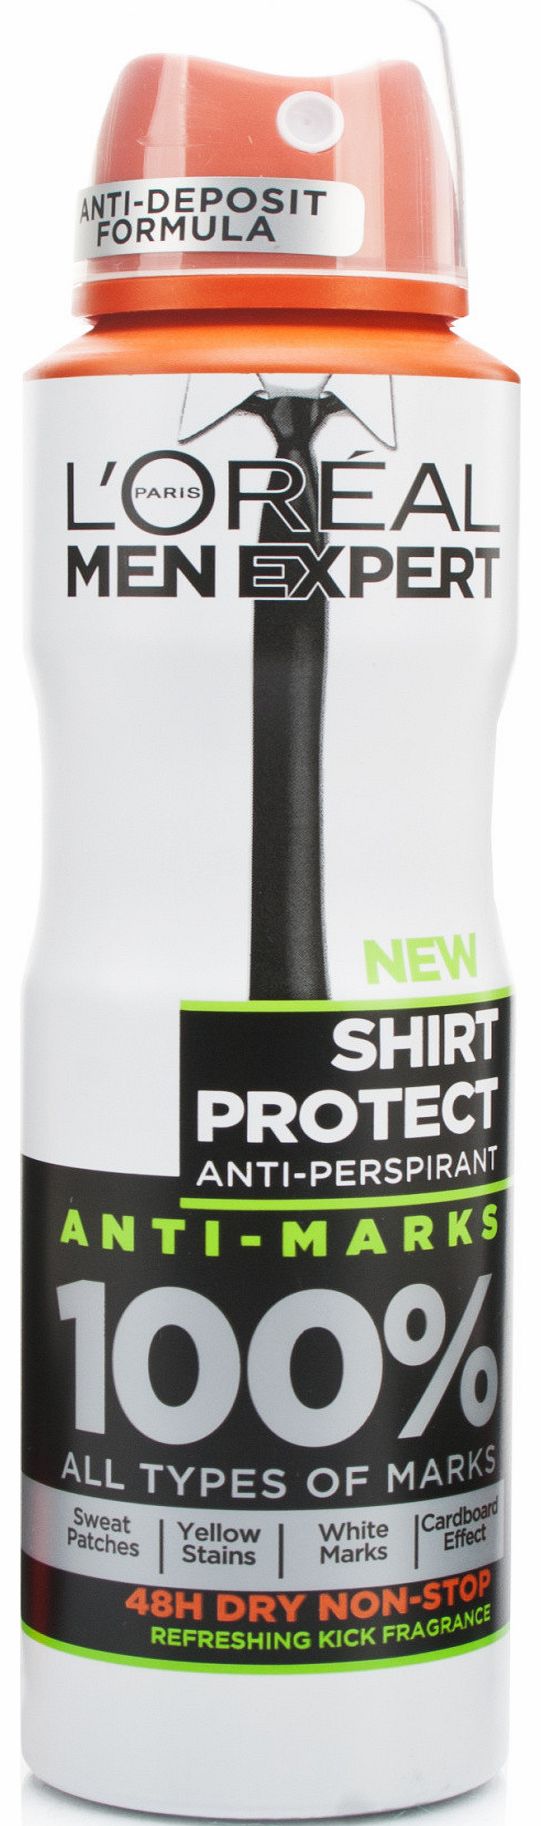 L'Oreal Men Expert Shirt Protect Refreshing